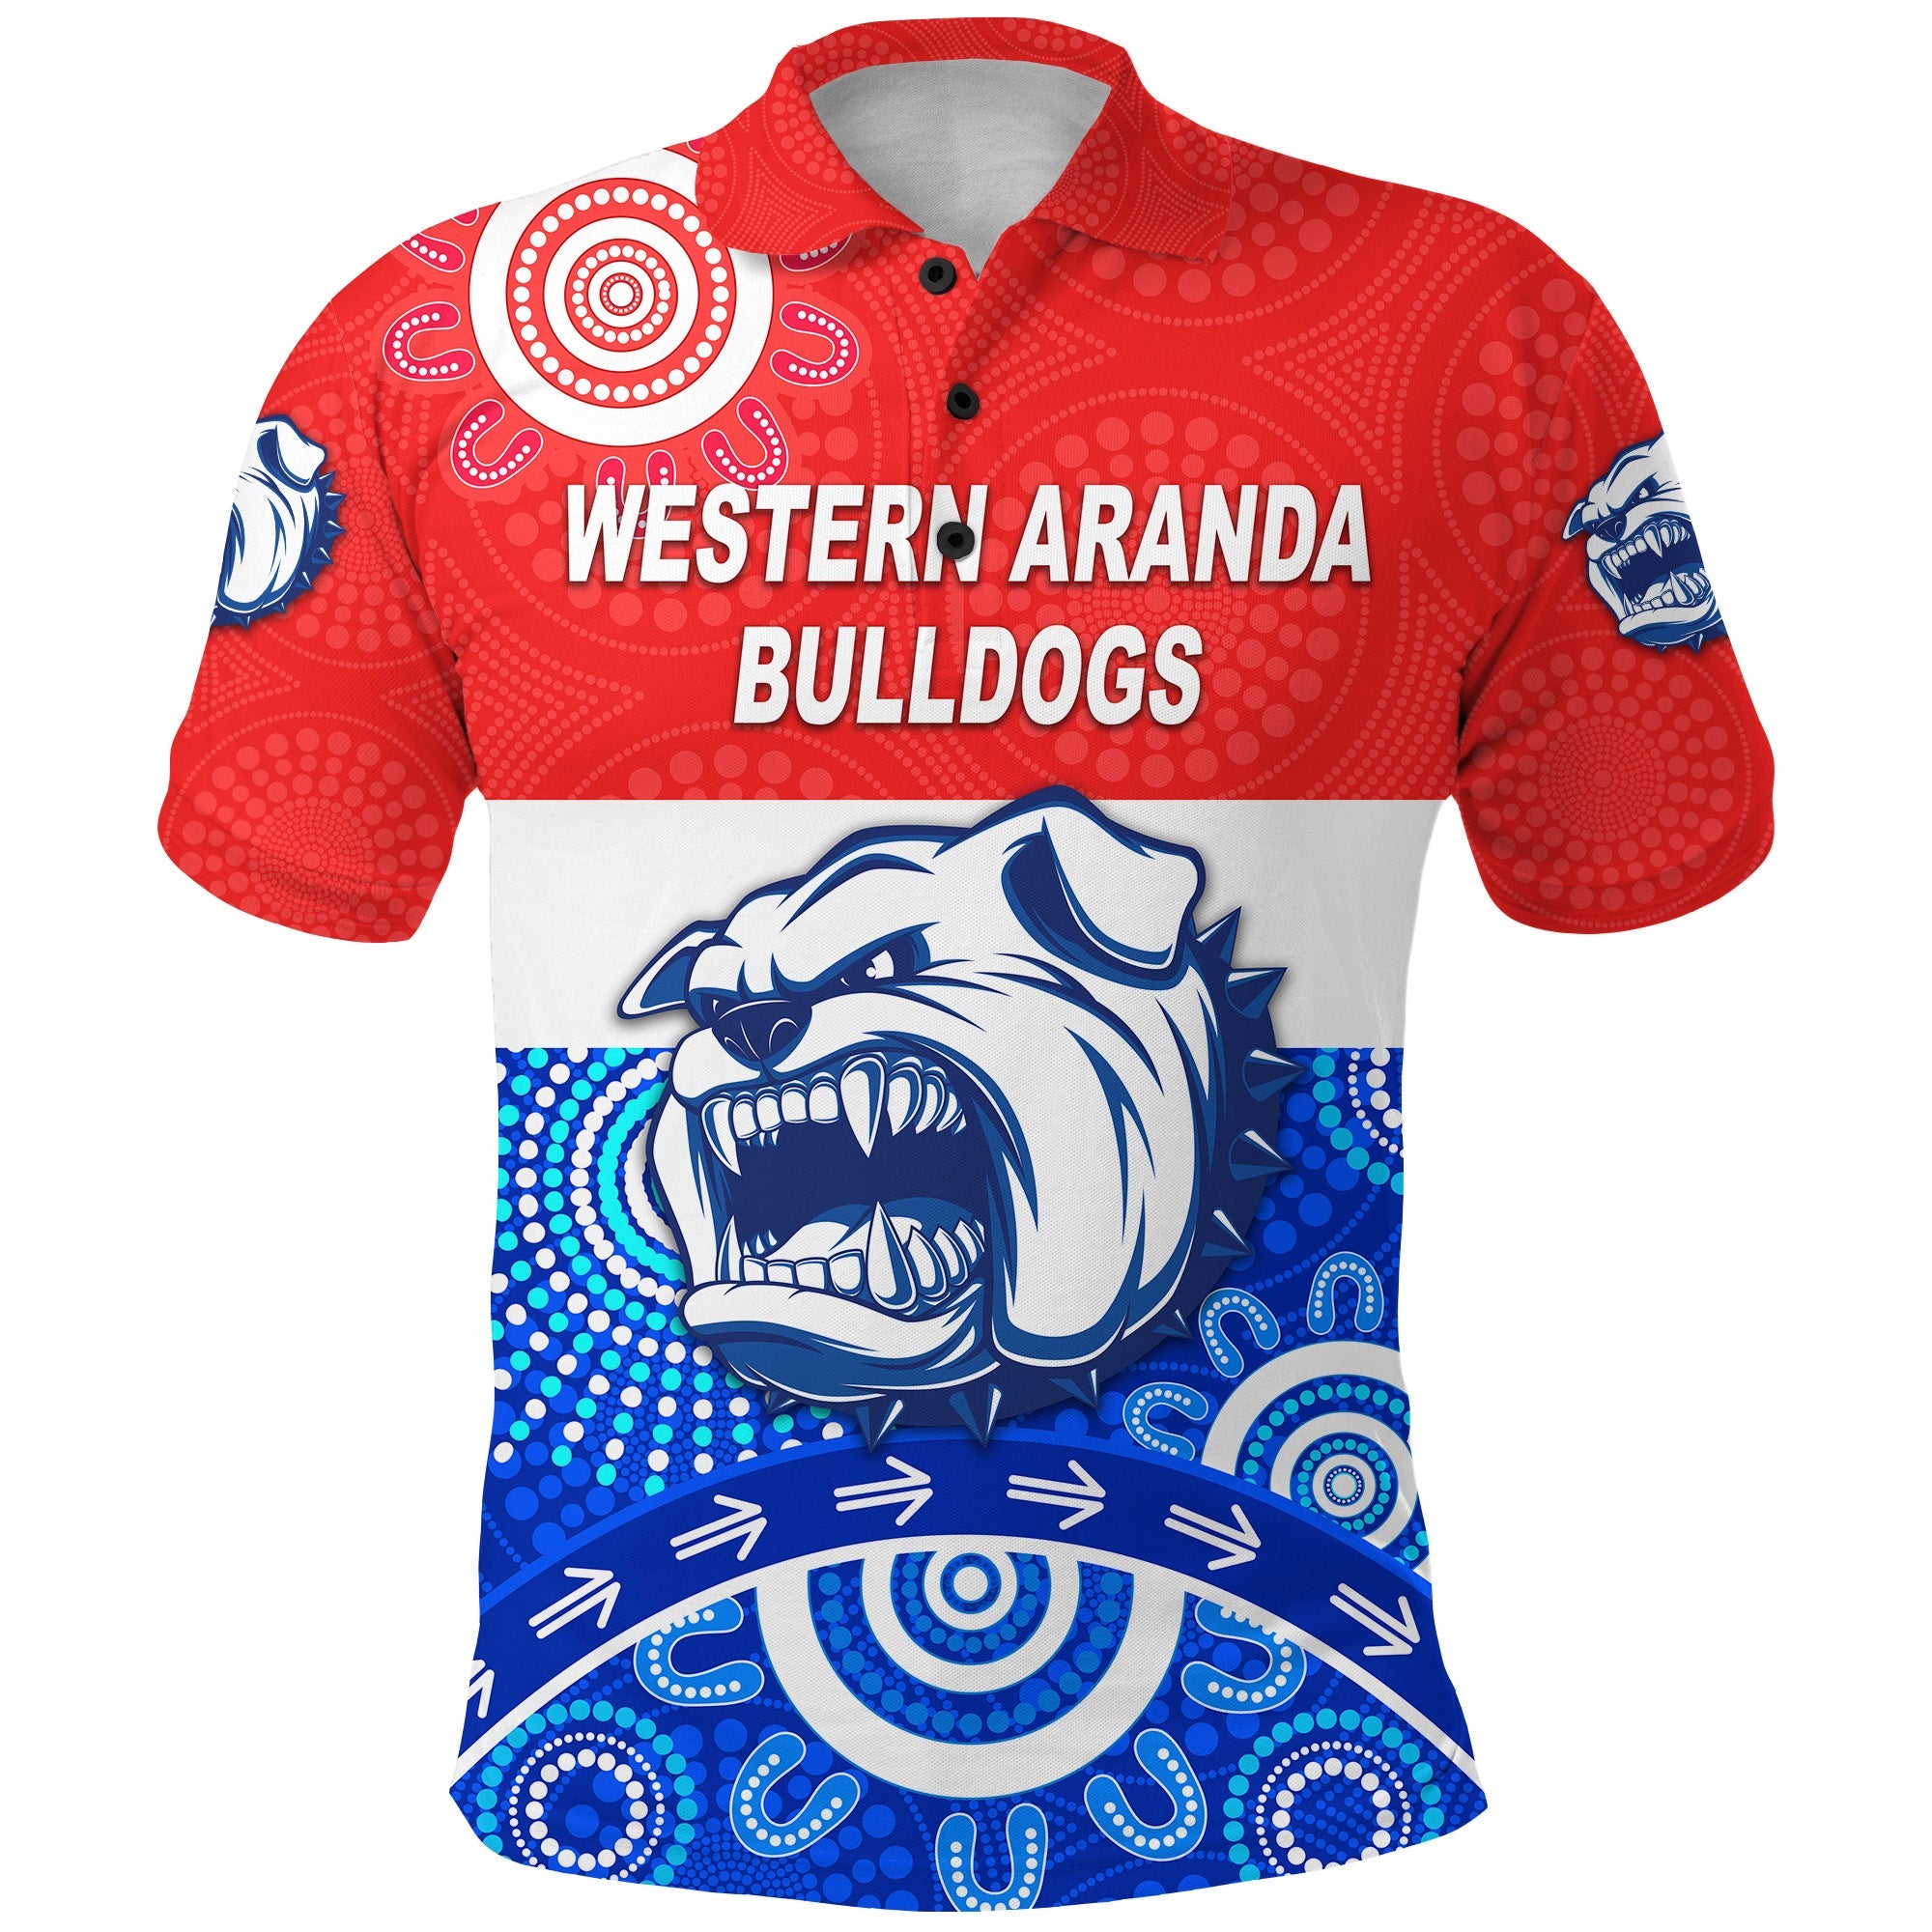 western-aranda-bulldogs-polo-shirt-hermannsburg-indigenous-version